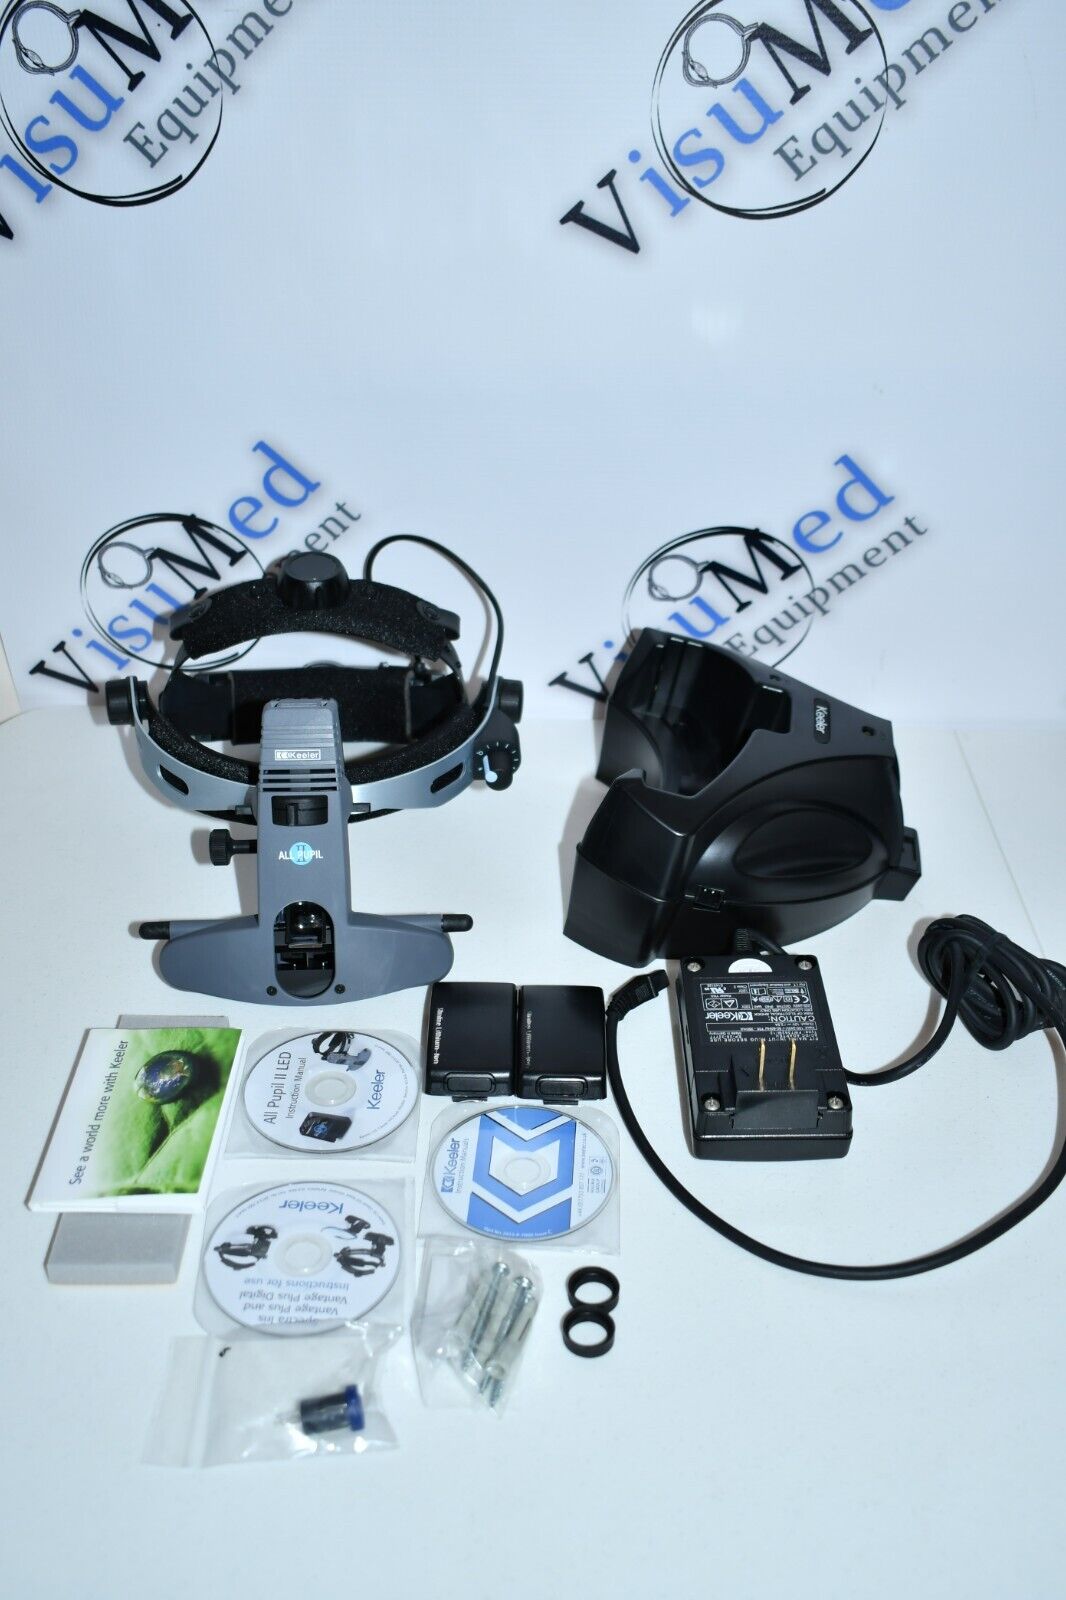 Keeler All pupil II LED slimline wireless indirect ophthalmoscope